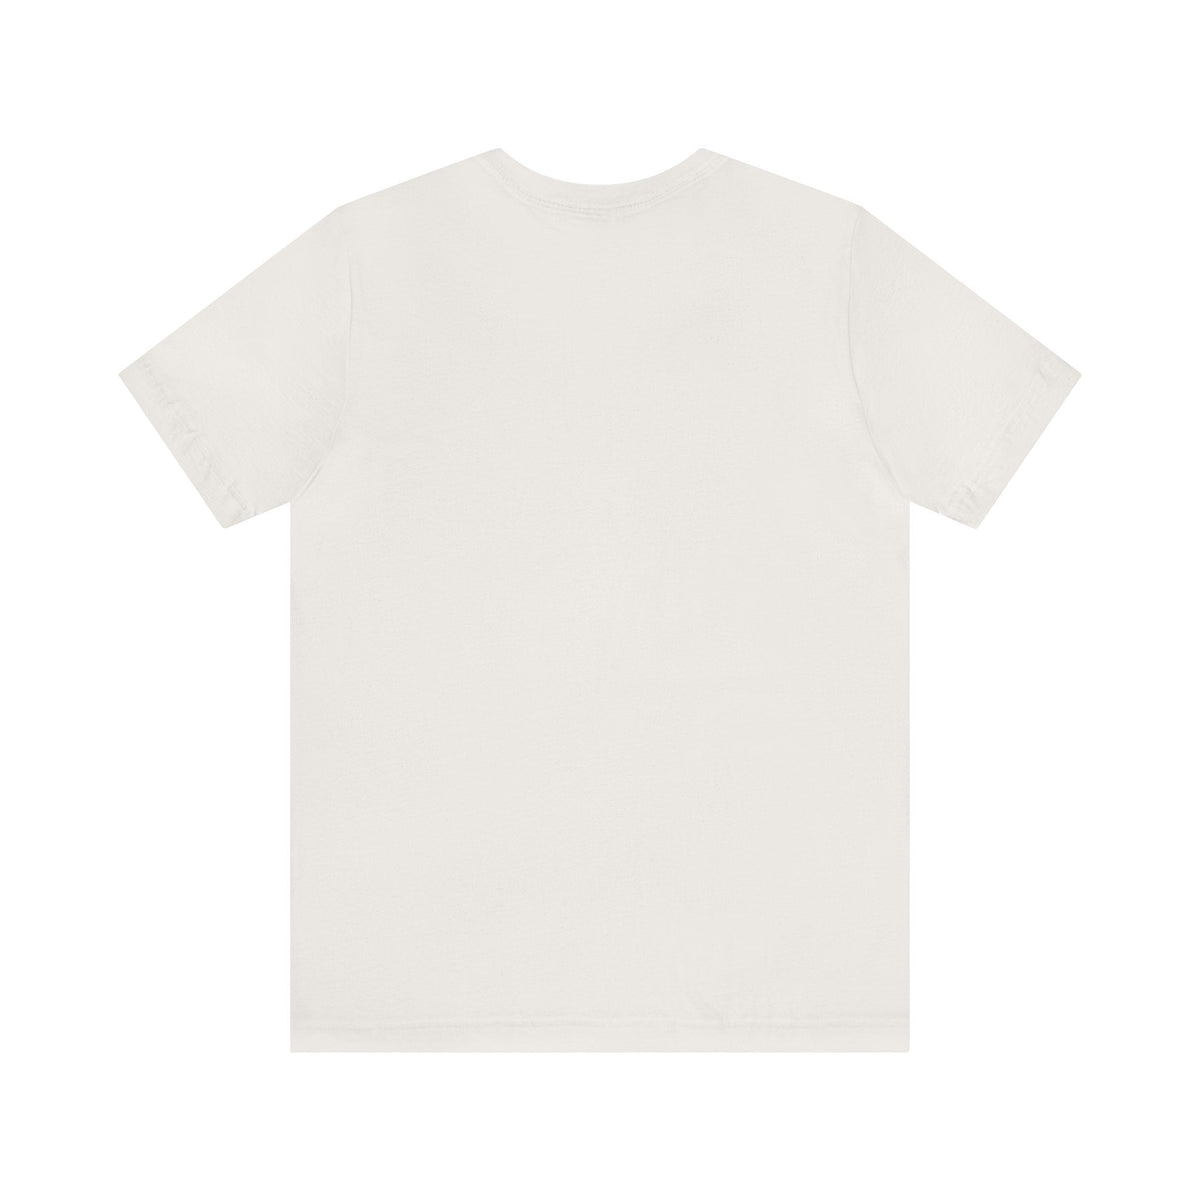 Yeehaw T-shirt | Emoji Cowboy Tee | Women's Western Graphic Tee T-Shirt TheFringeCultureCollective